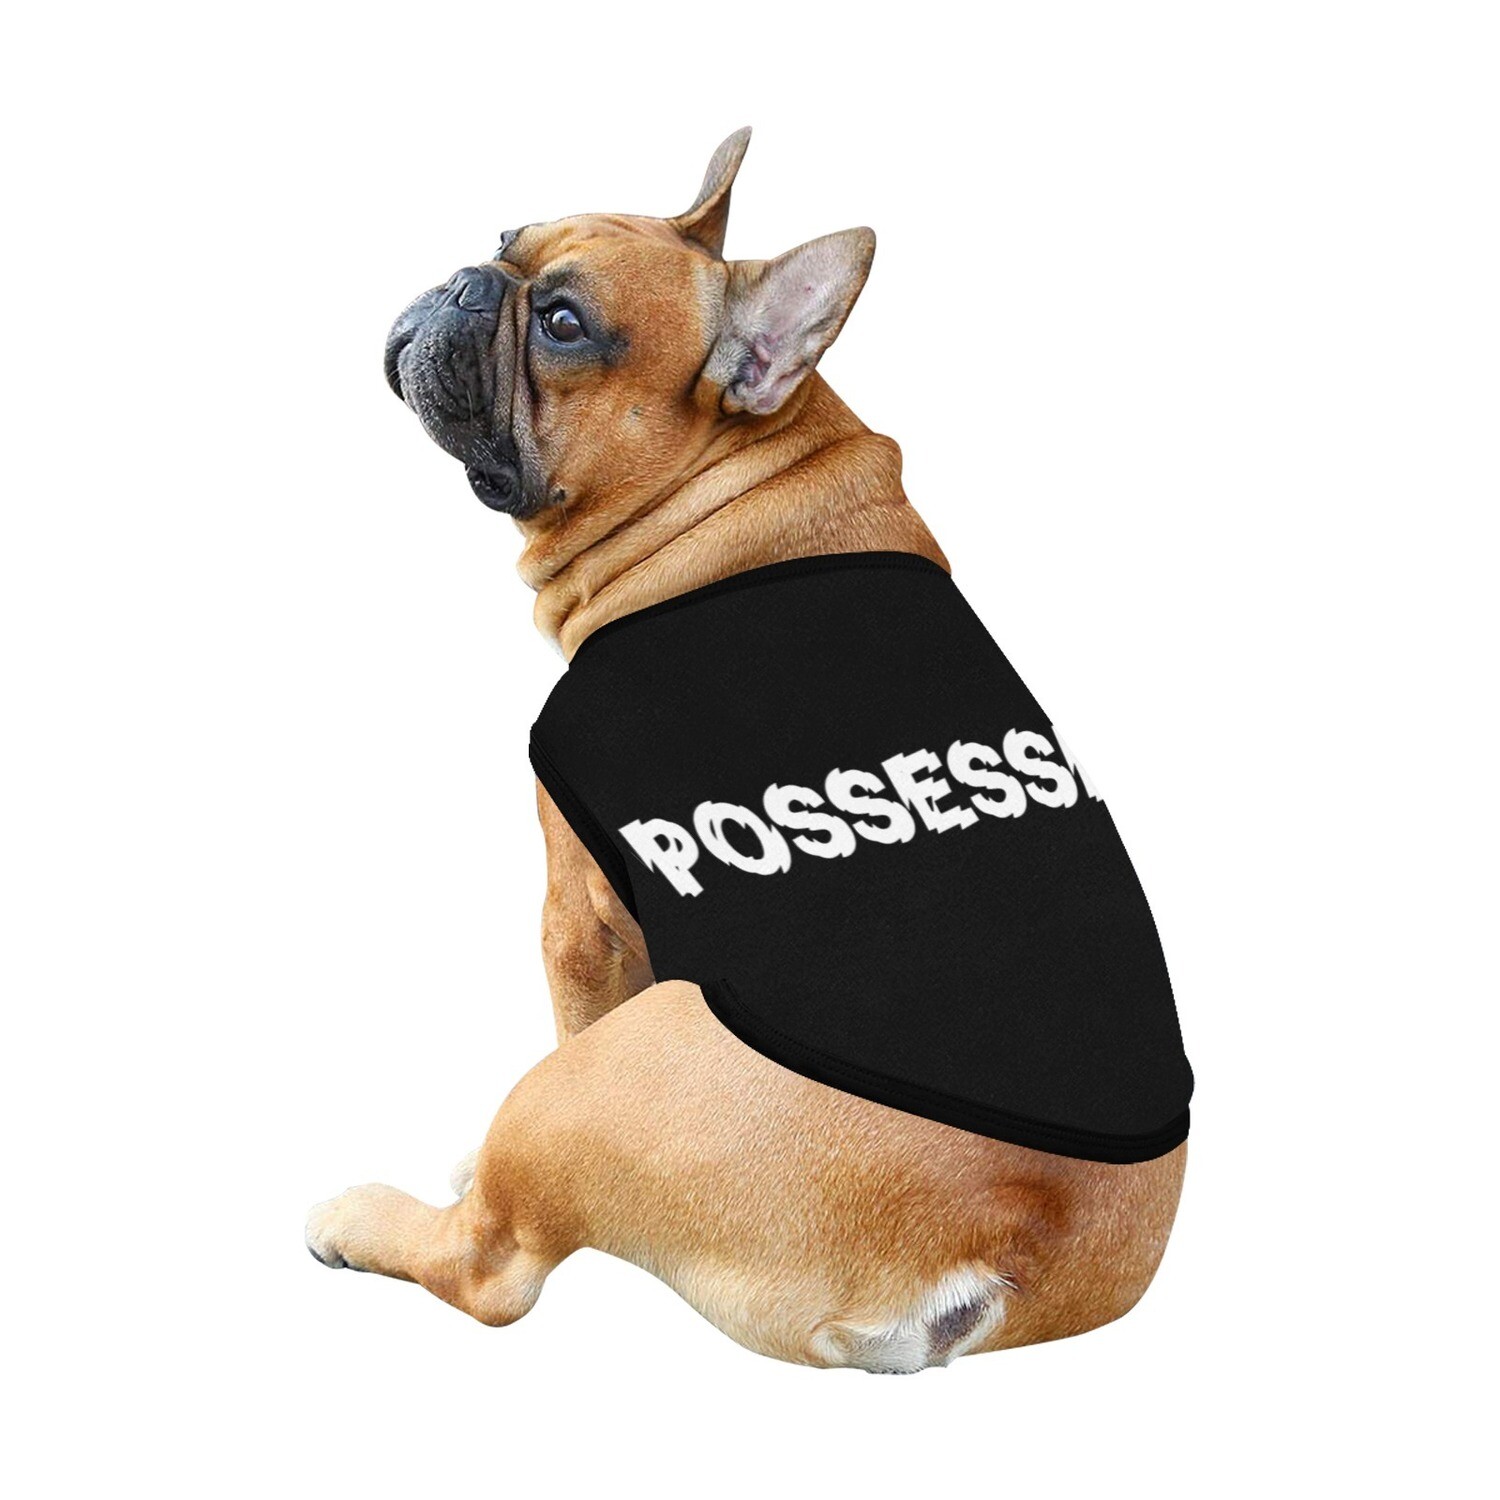 🐕 David Rose Possessed Dog t-shirt, Dog Tank Top, Dog shirt, Dog clothes, Gifts, front back print, 7 sizes XS to 3XL, Schitt's Creek, TV series